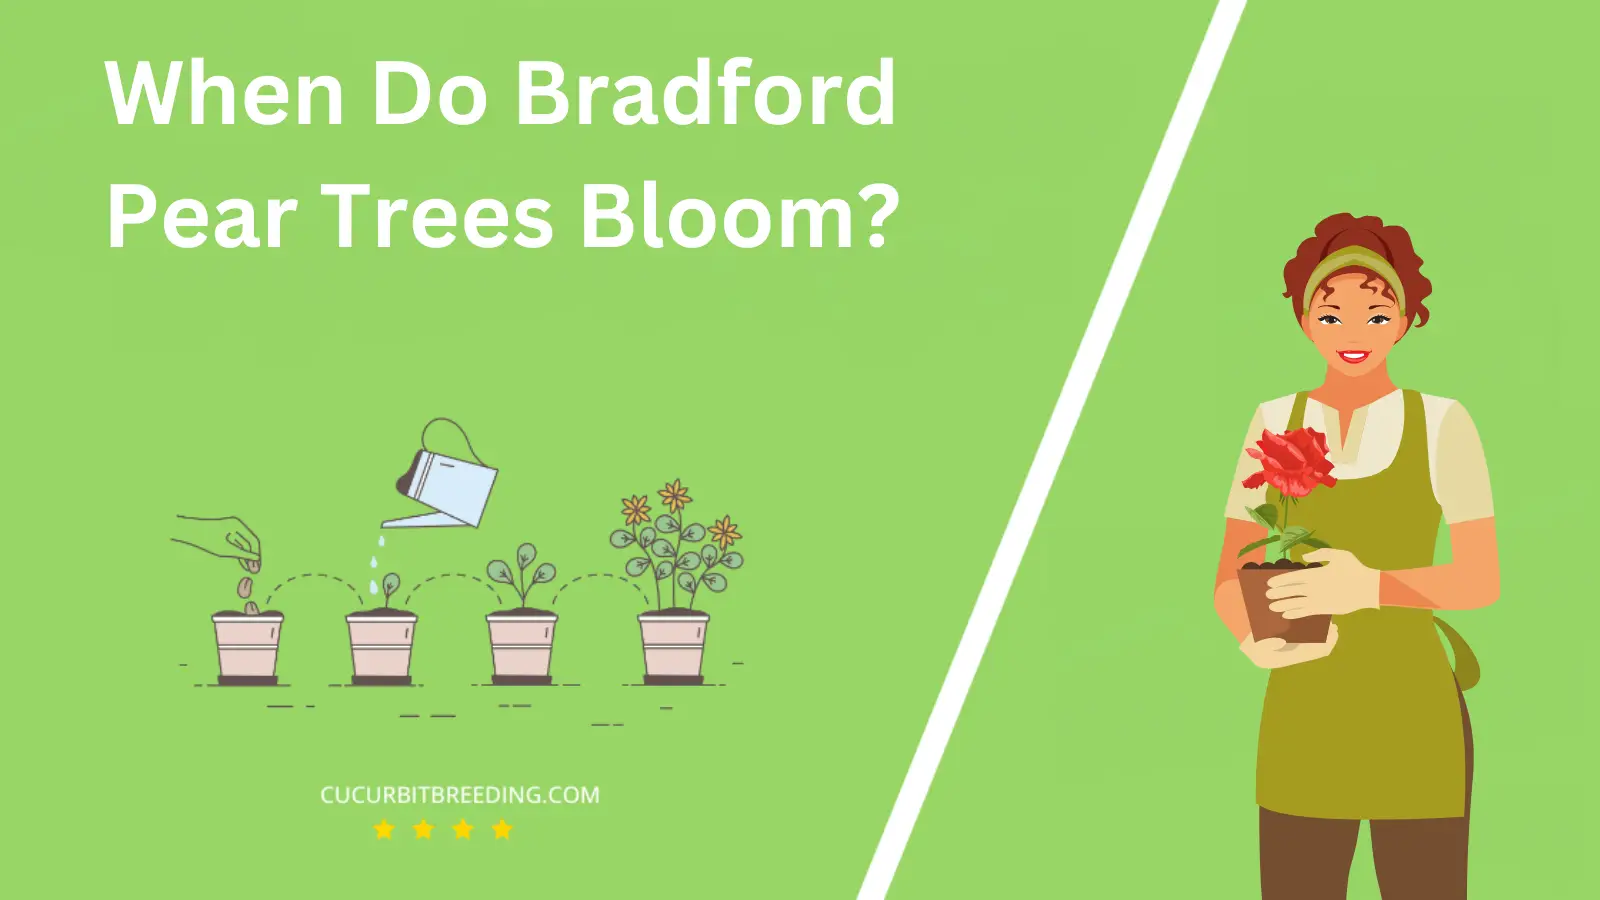 When Do Bradford Pear Trees Bloom?